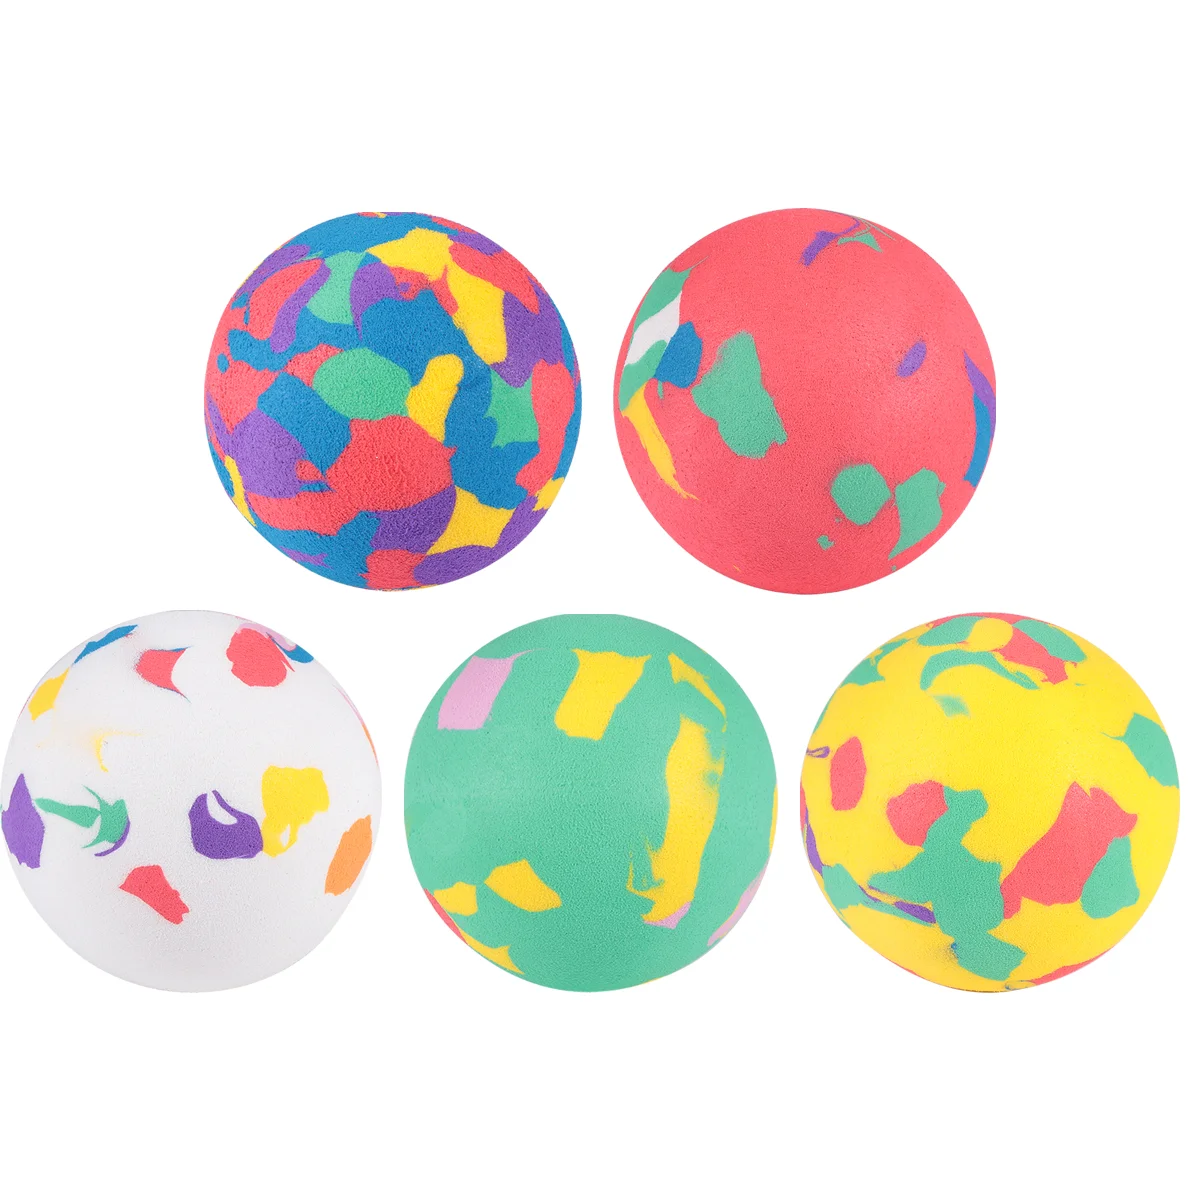 

12pcs Bouncy Balls Balls Sponge Play Balls Colorful High Bouncing Balls Kids Playtime Balls for Children Students Kids